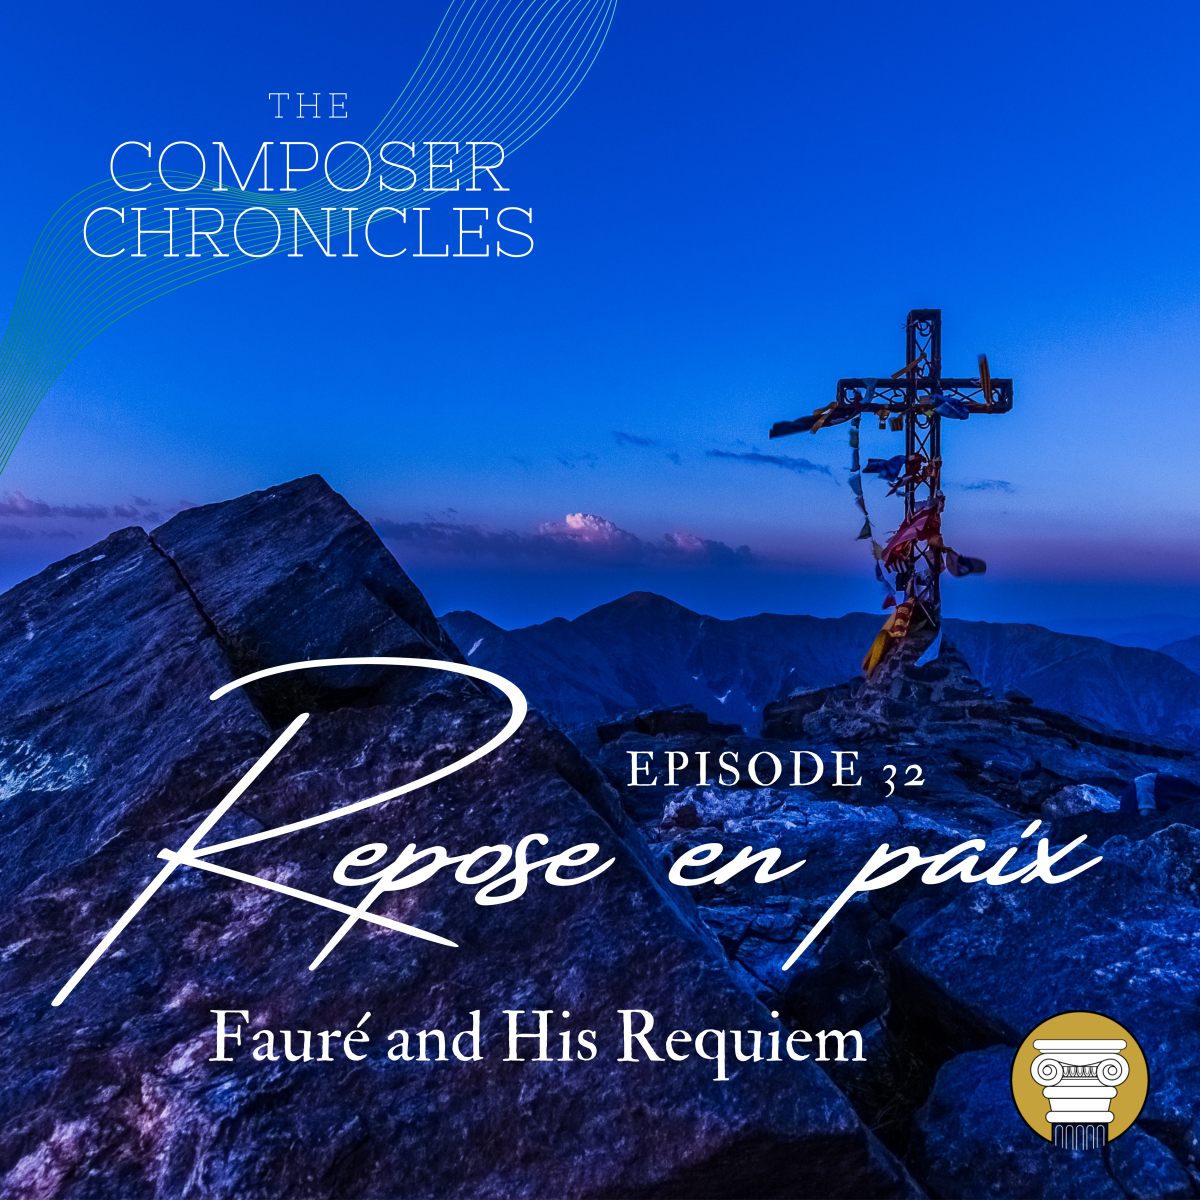 Ep. 32: Repose en paix – Fauré and His Requiem